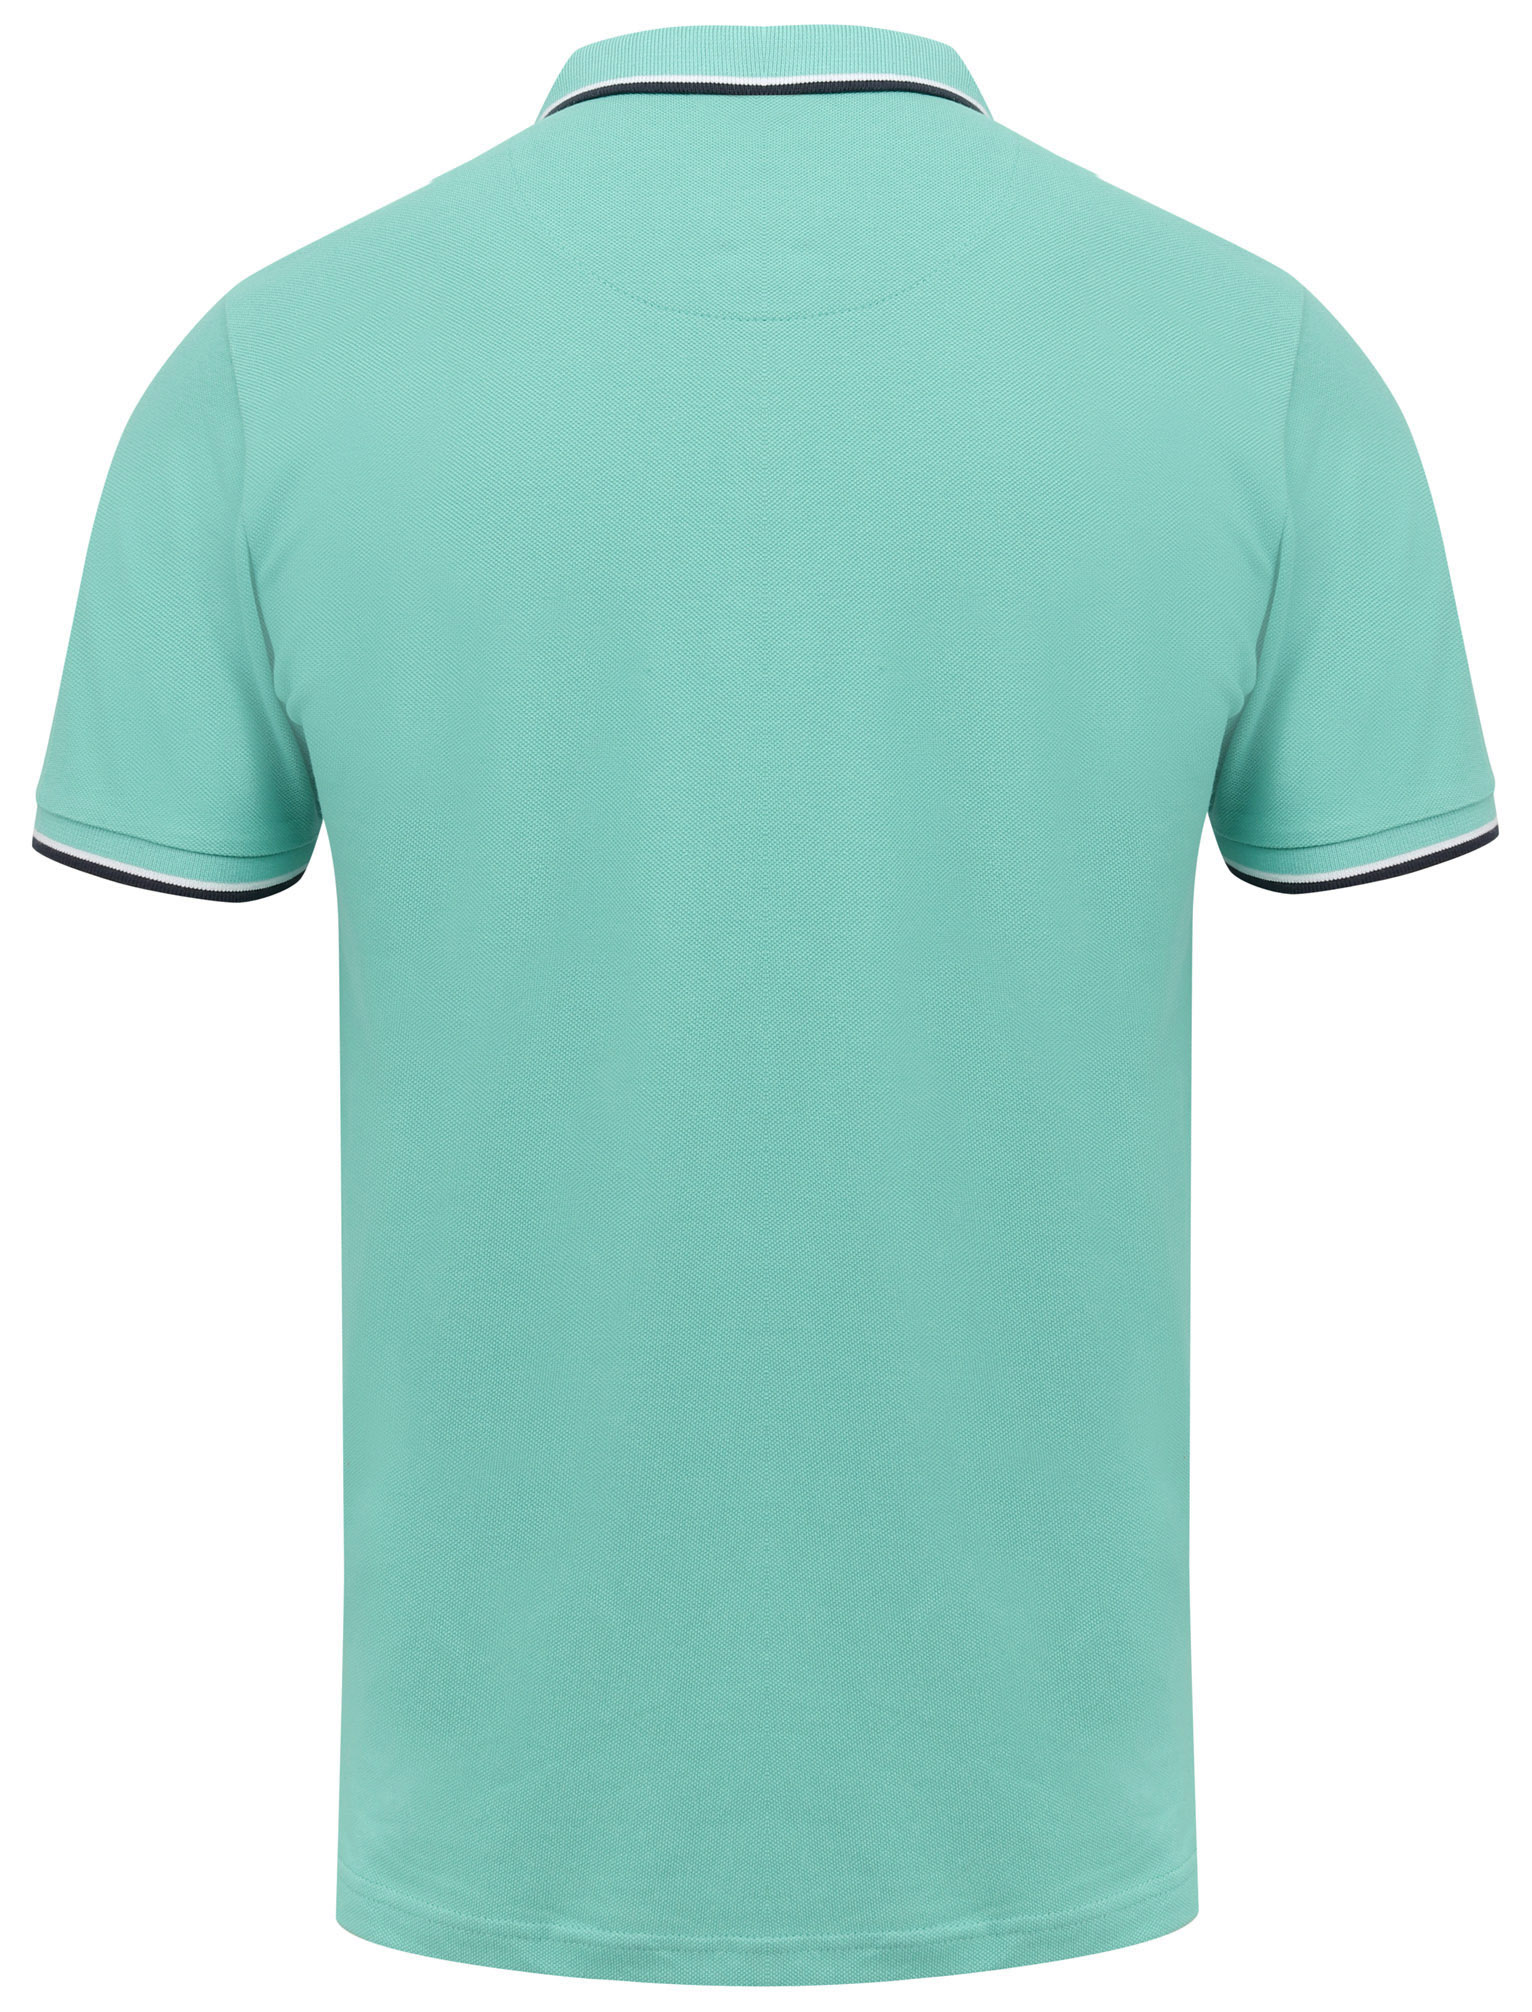 South Shore Men/'s Rocky Bay Classic 100/% Cotton Pique Polo Shirt T-Shirt Top New